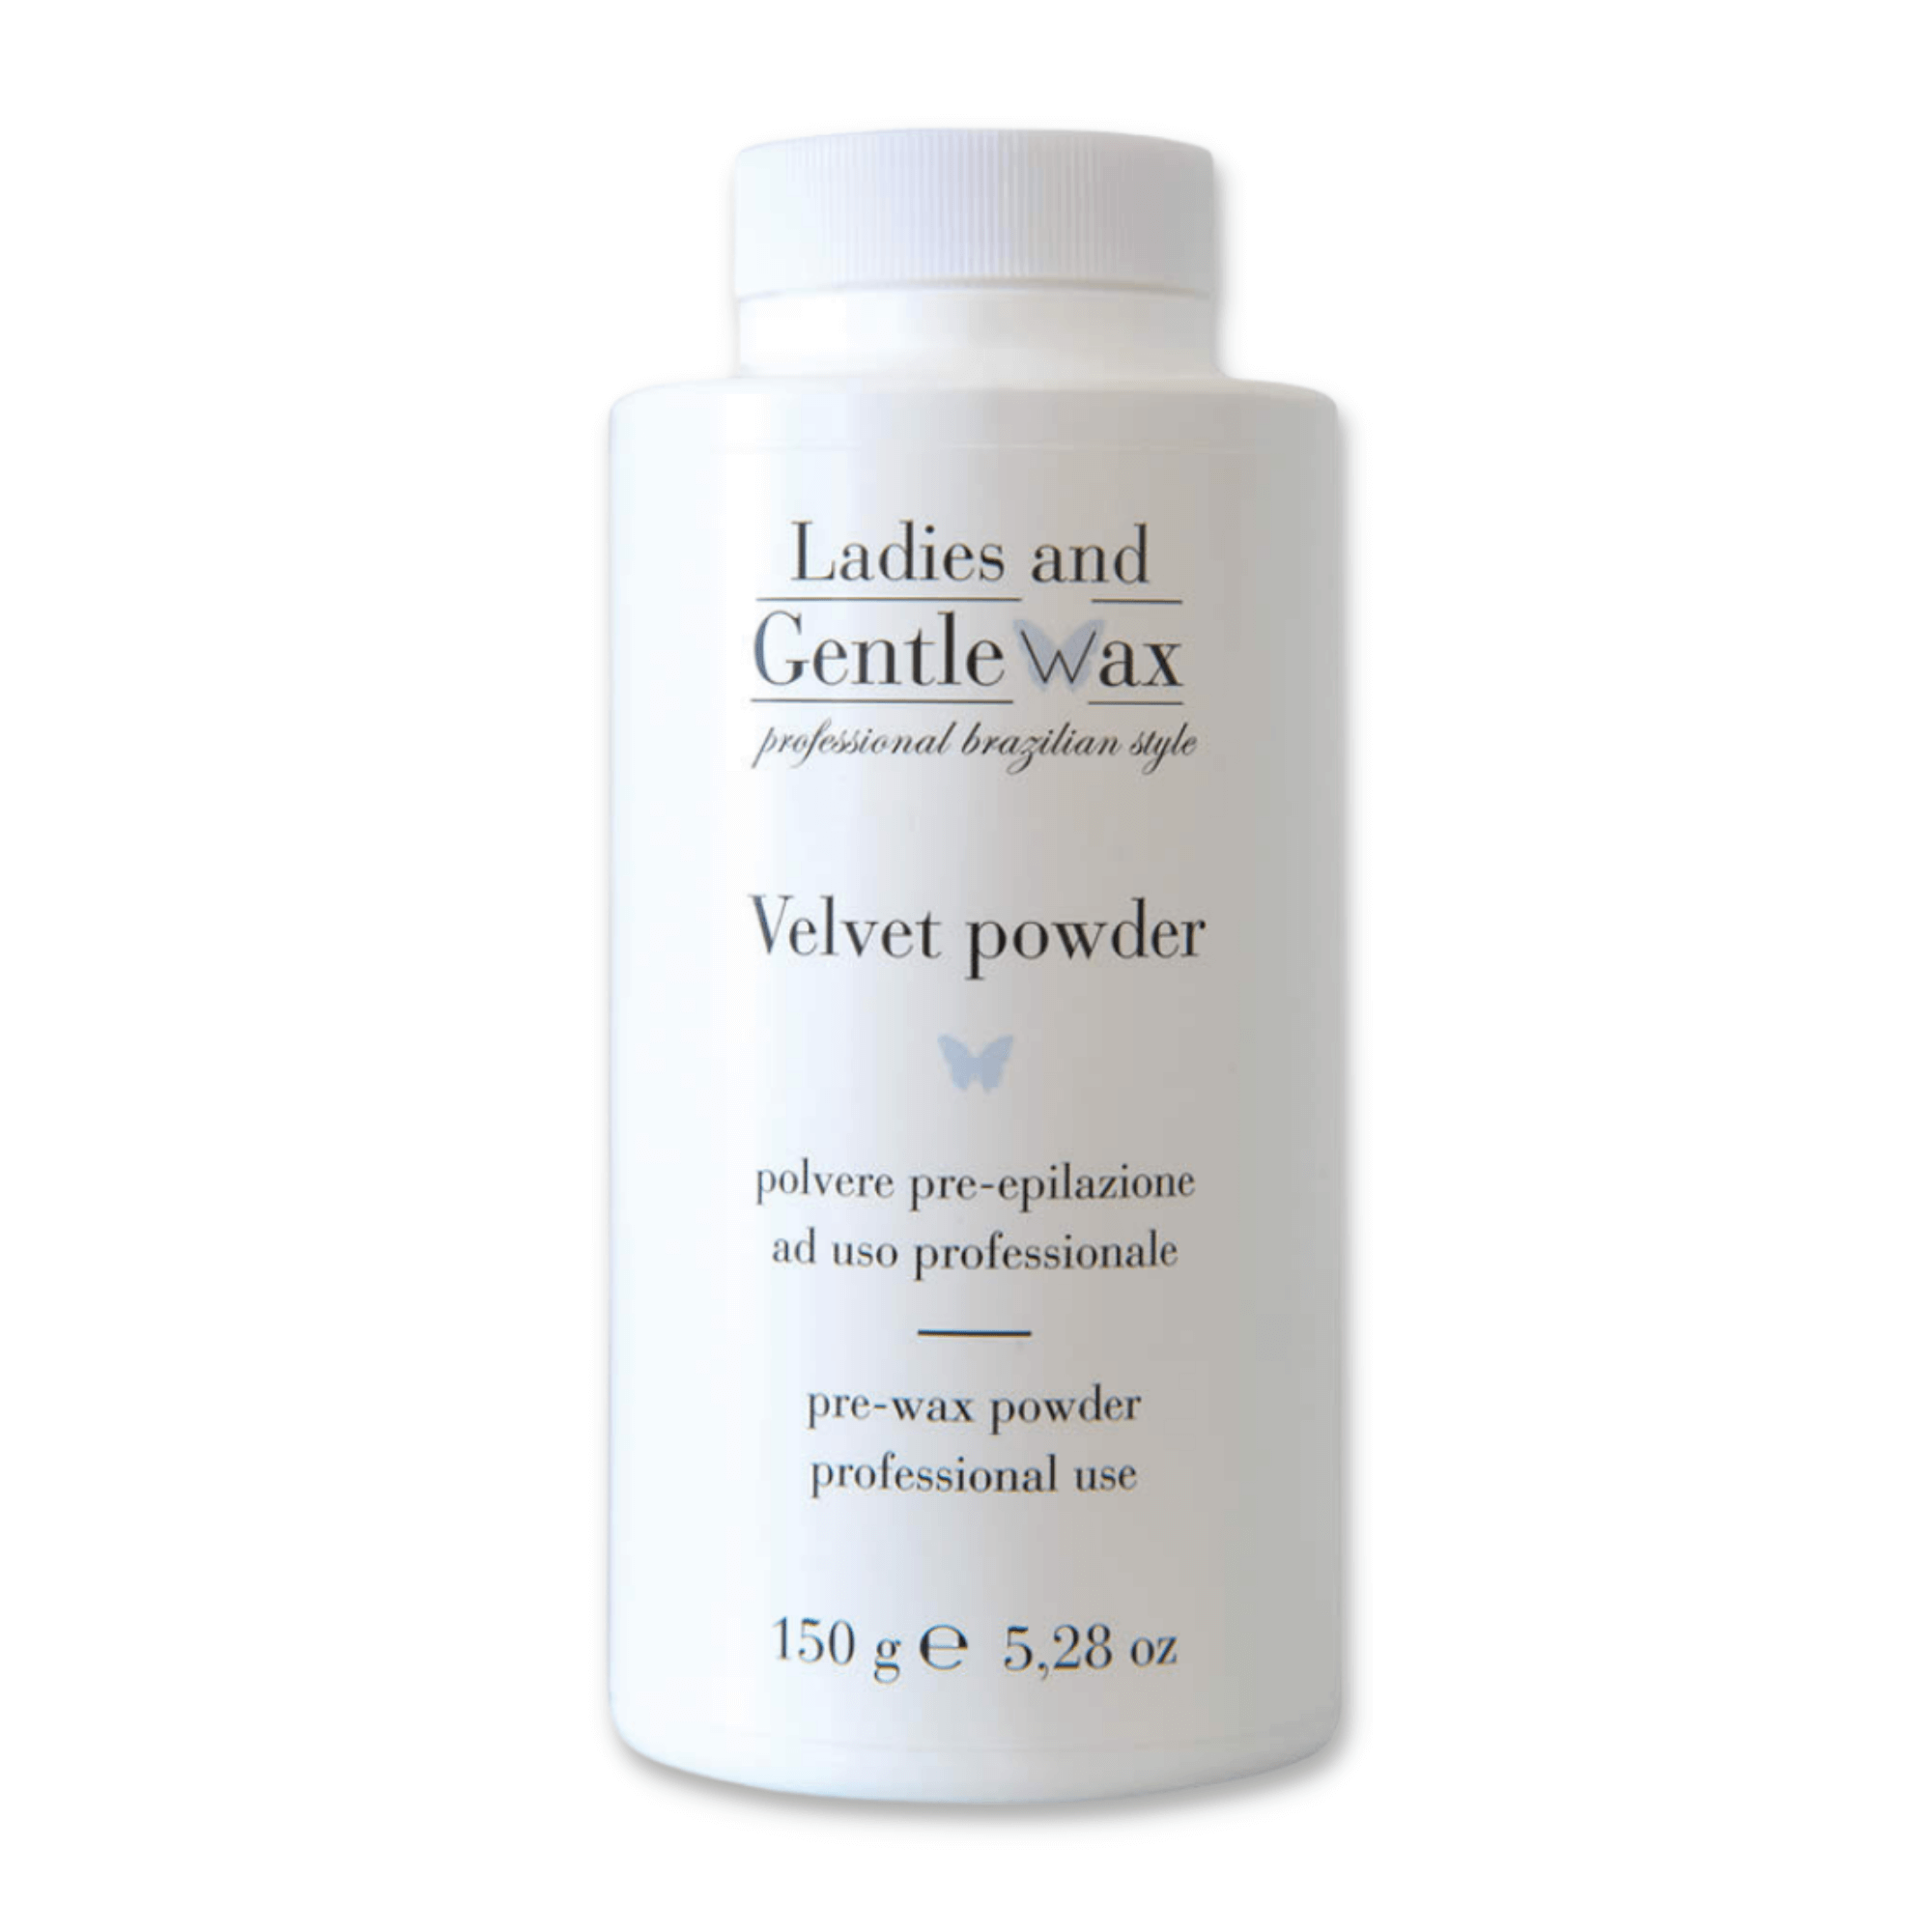 Ladies and Gentlewax Velvet Powder